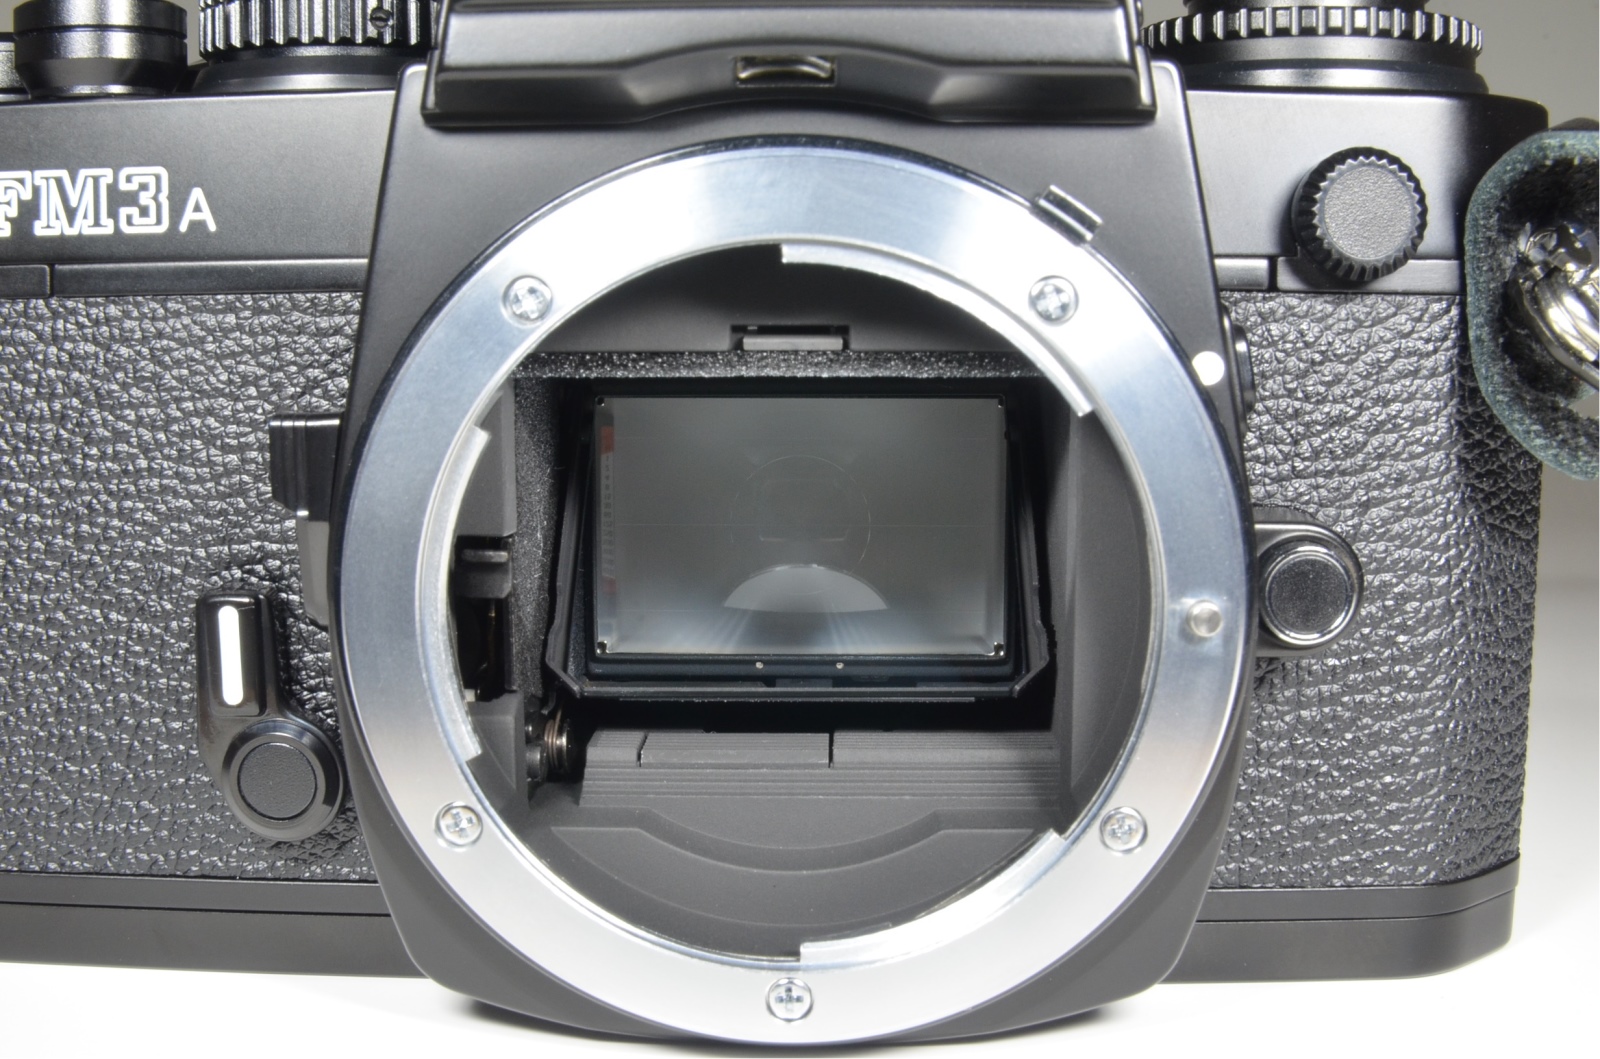 nikon fm3a 35mm film camera black